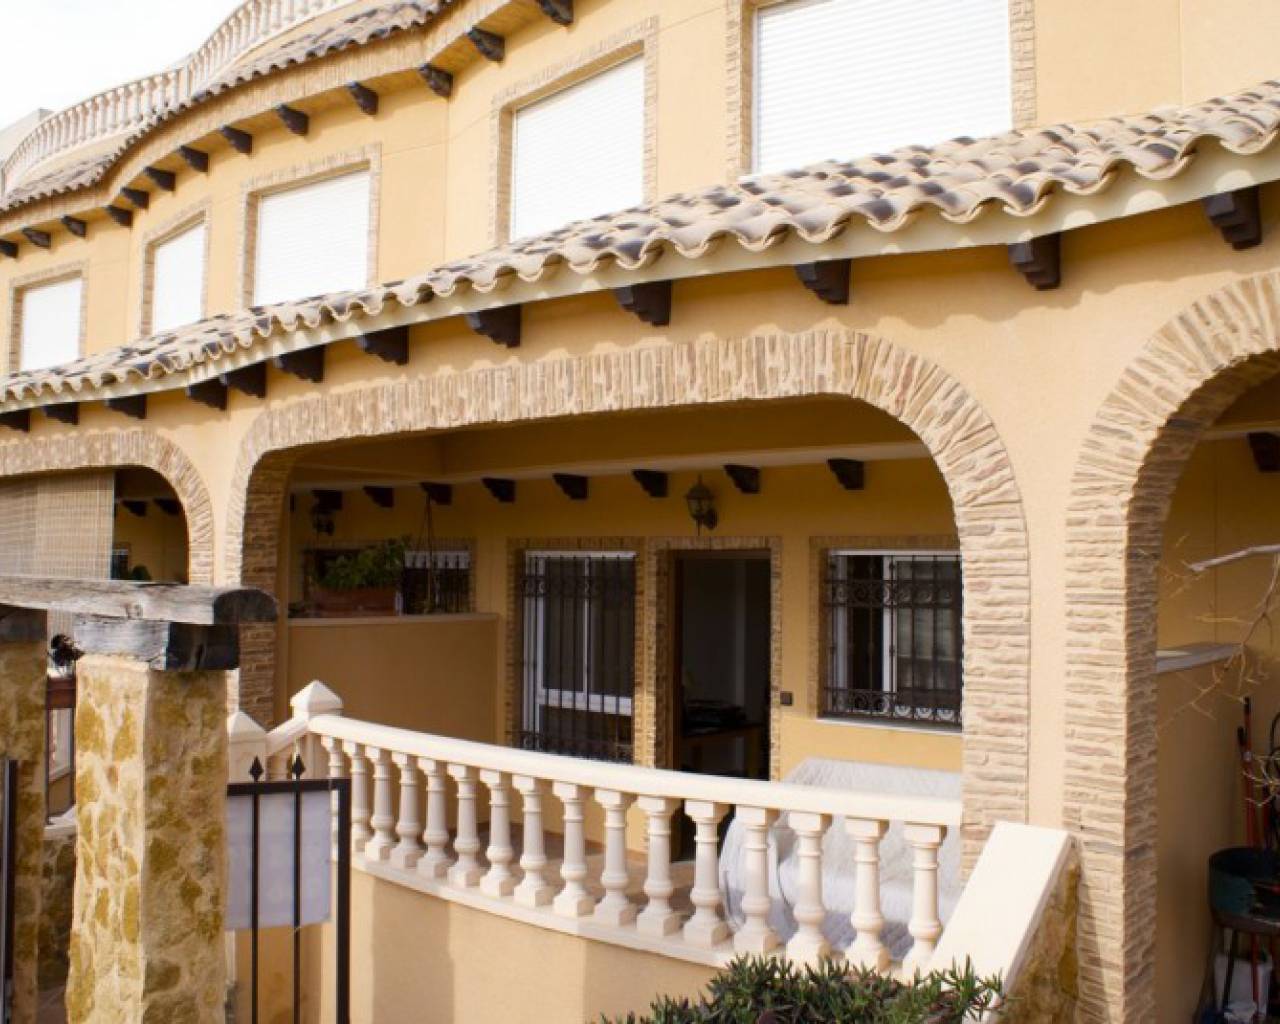 4 bedroom house / villa for sale in Guardamar del Segura, Costa Blanca